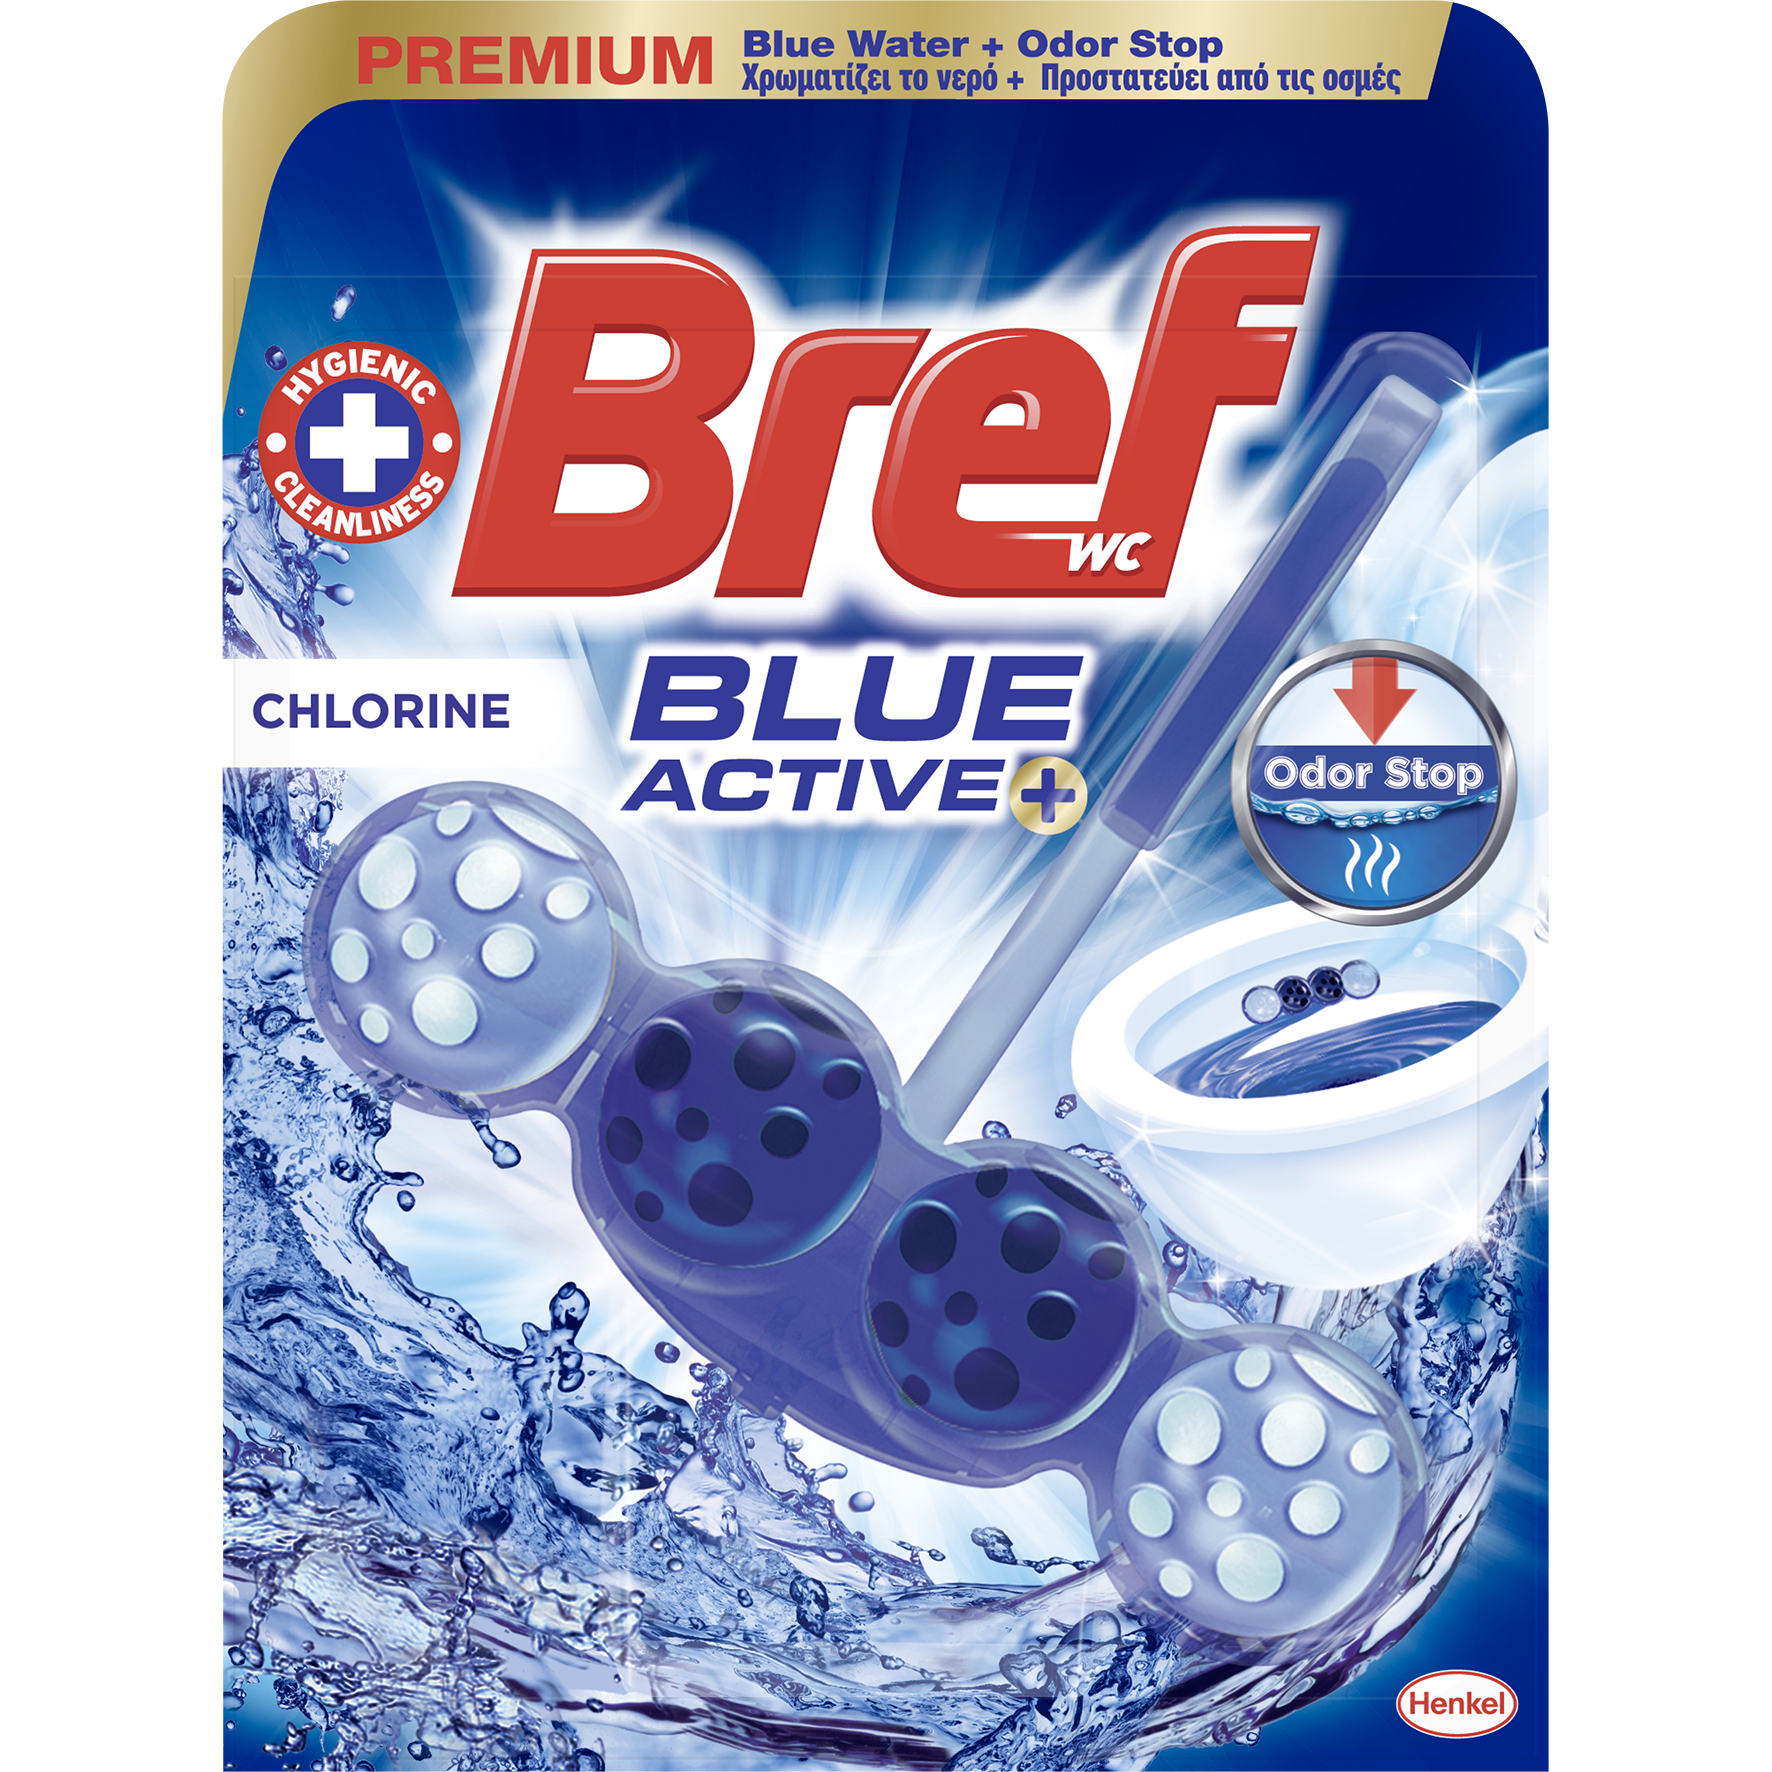 Wc Block, Blue Activ, Hygiene, Bref Wc (50g)